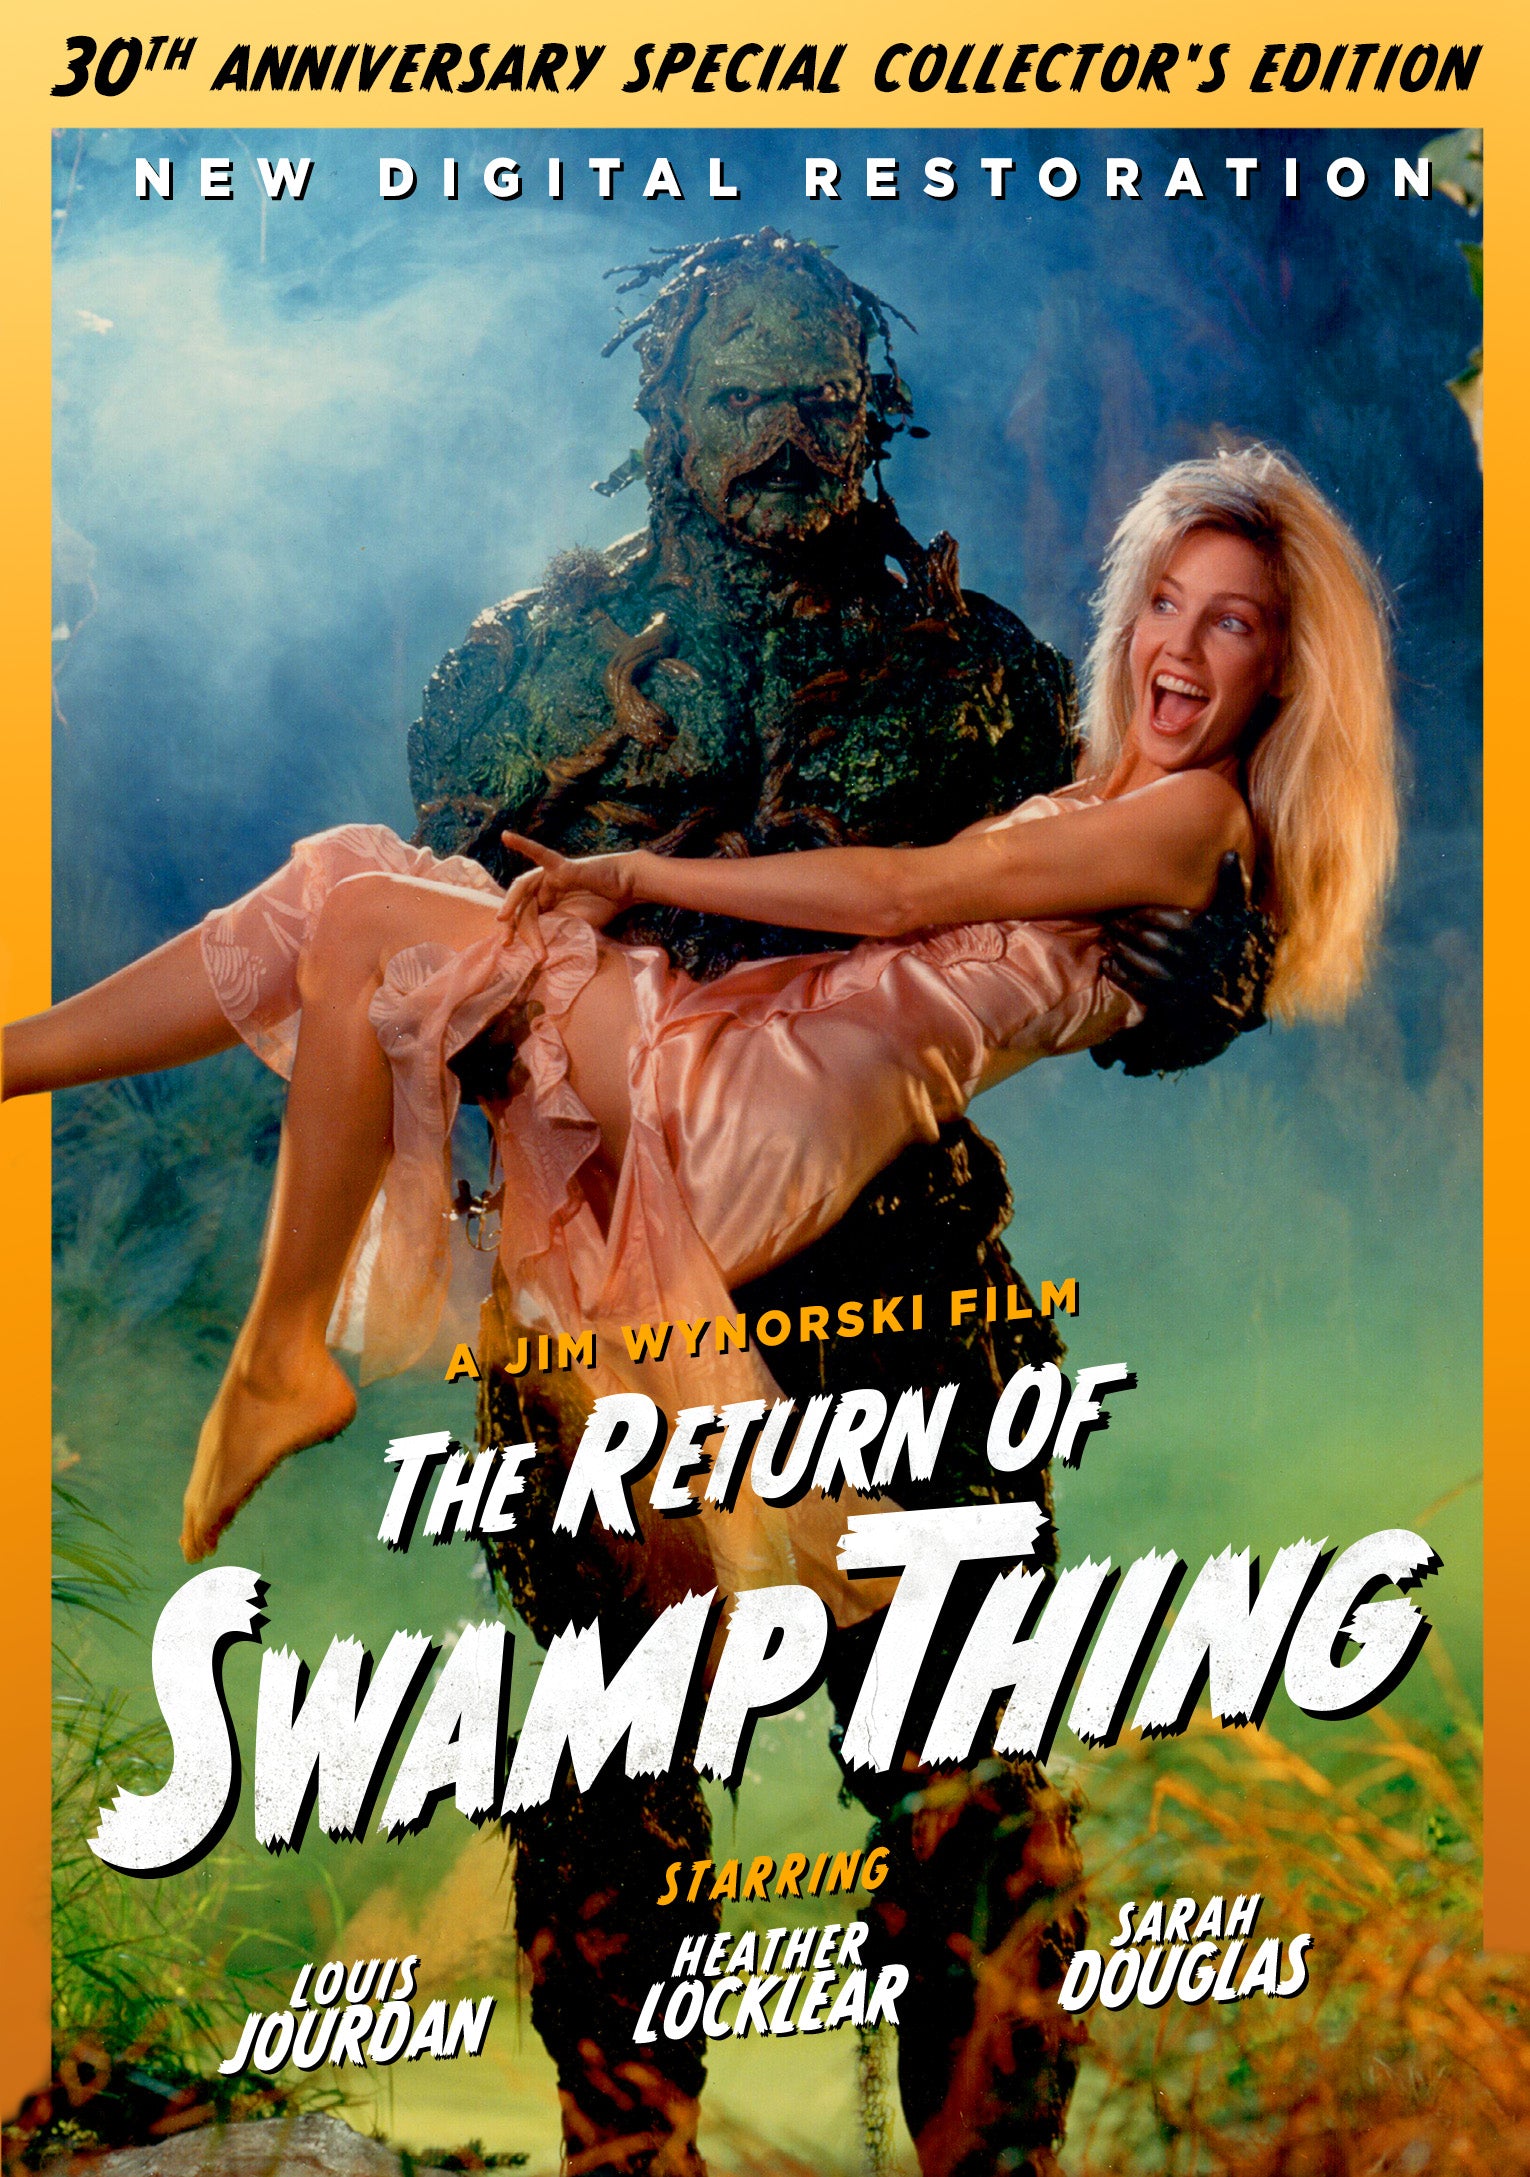 Return of Swamp Thing cover art